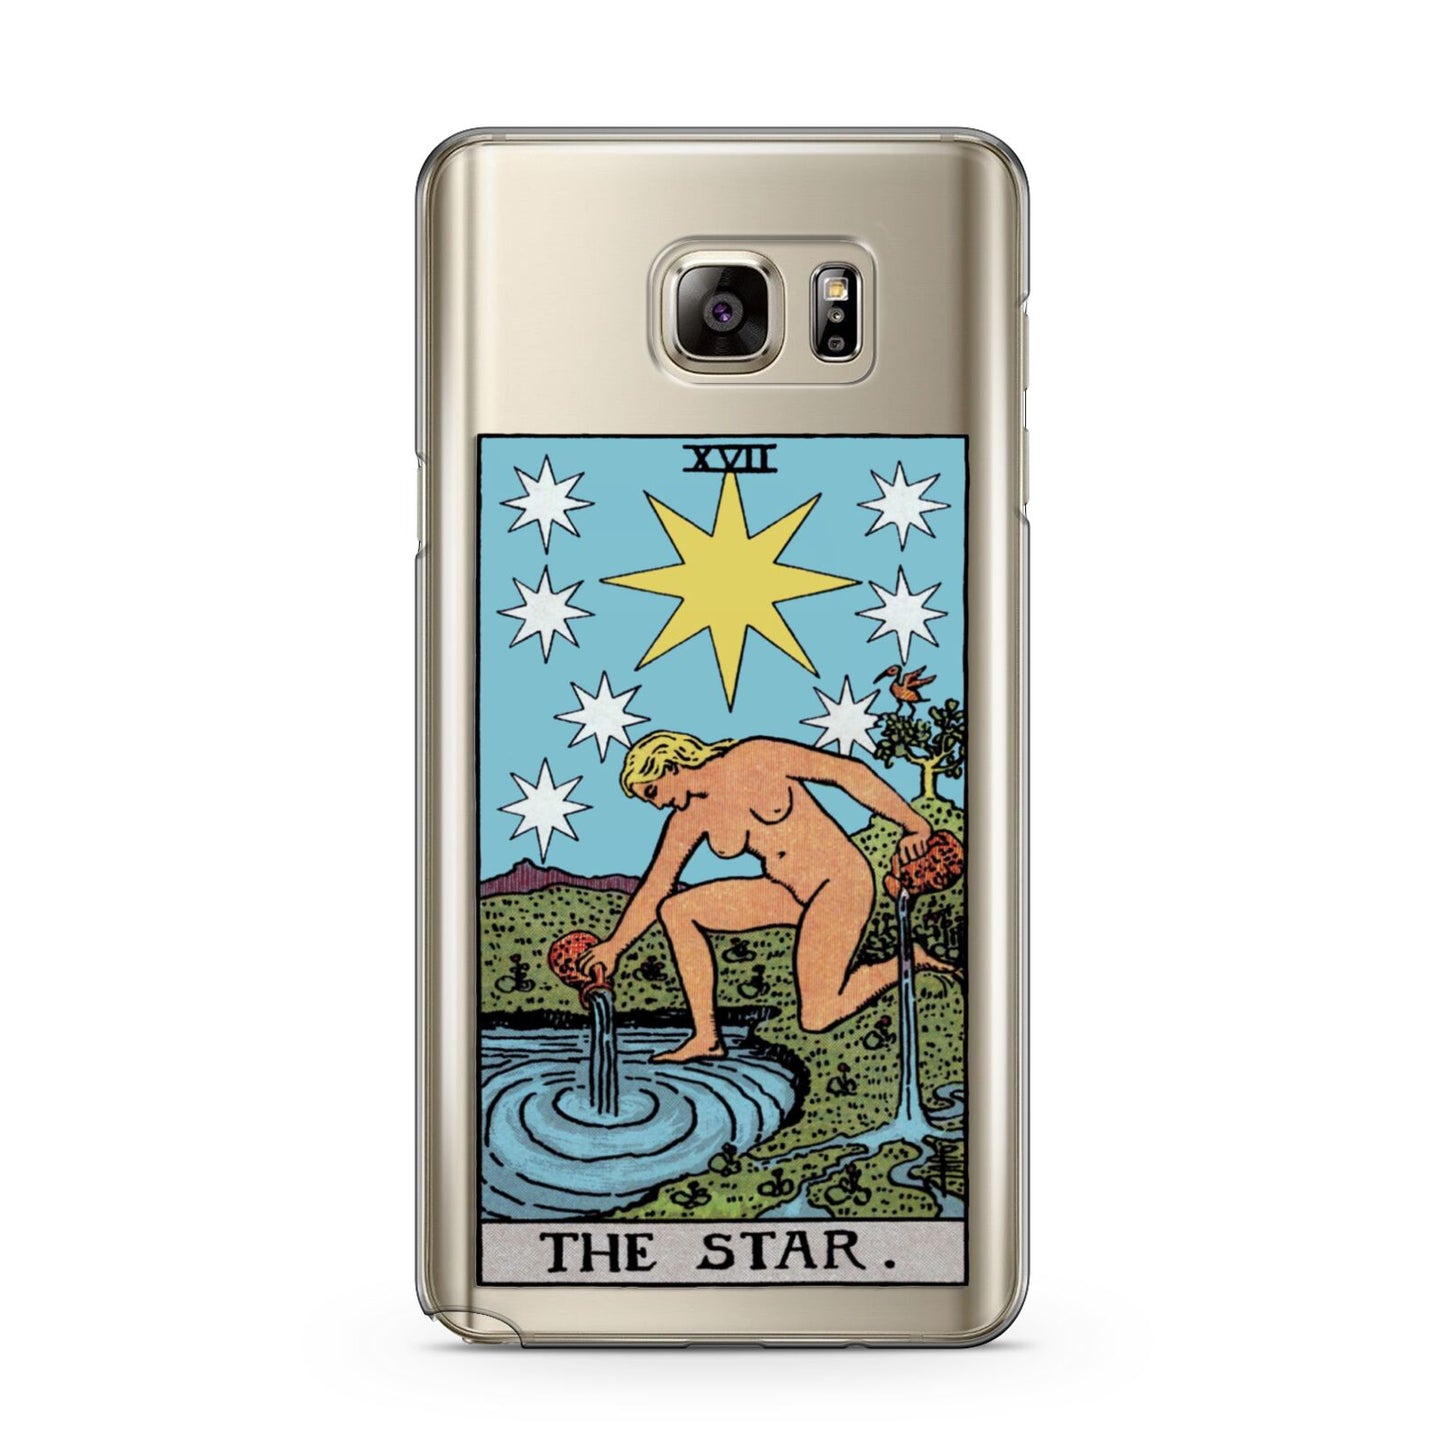 The Star Tarot Card Samsung Galaxy Note 5 Case